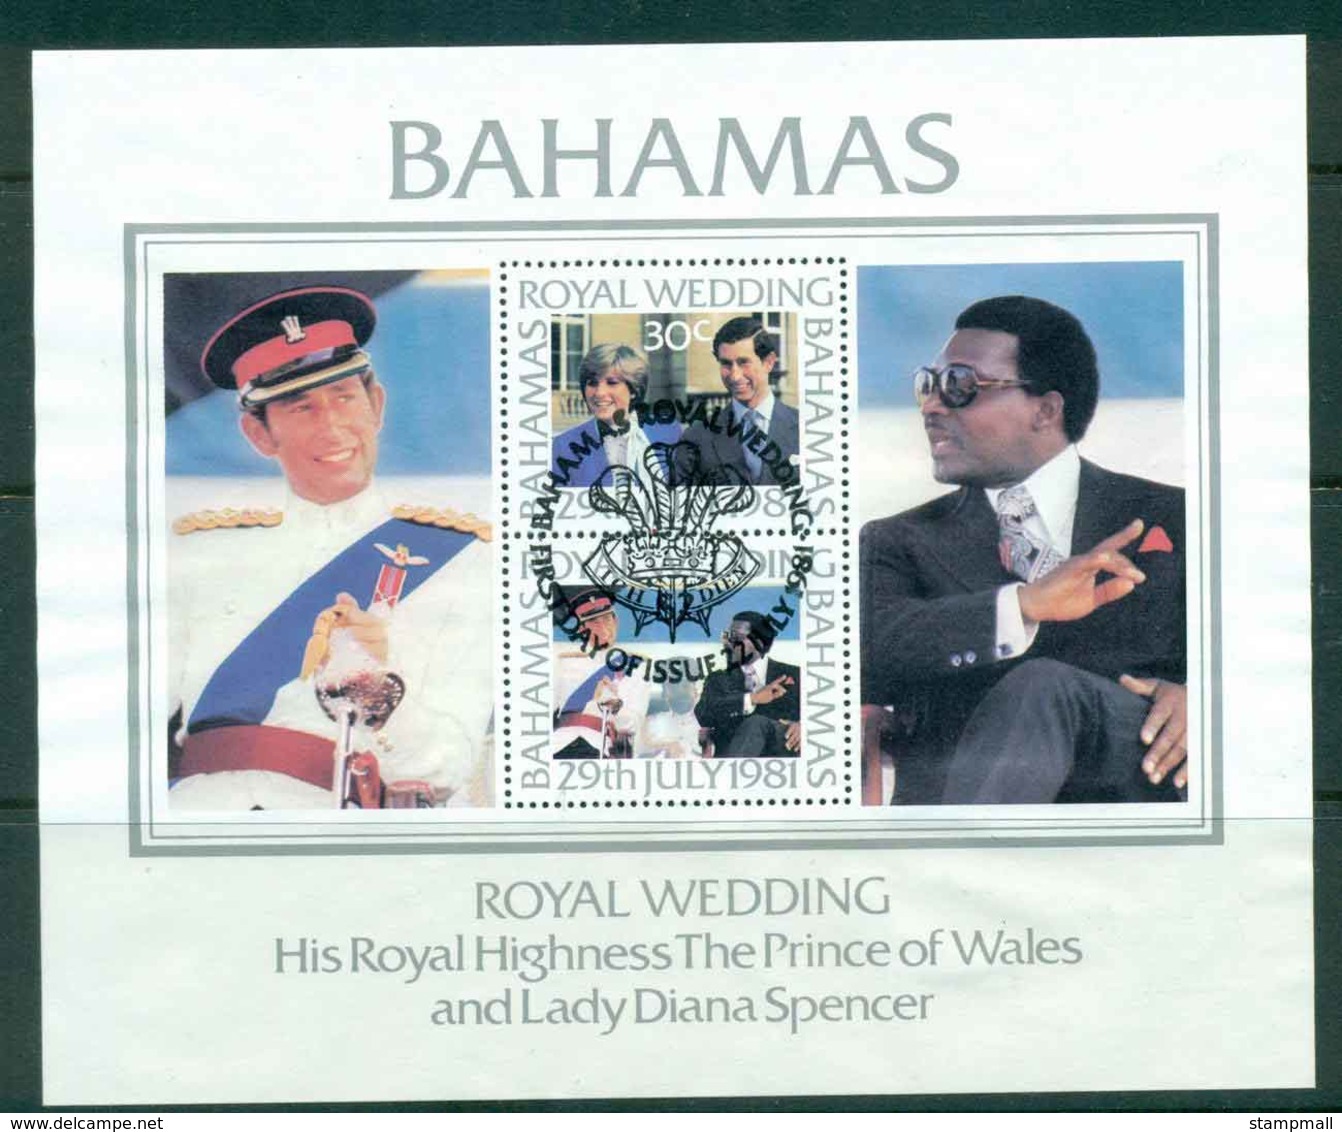 Bahamas 1981 Charles & Diana Wedding MS FU Lot44816 - Bahamas (1973-...)